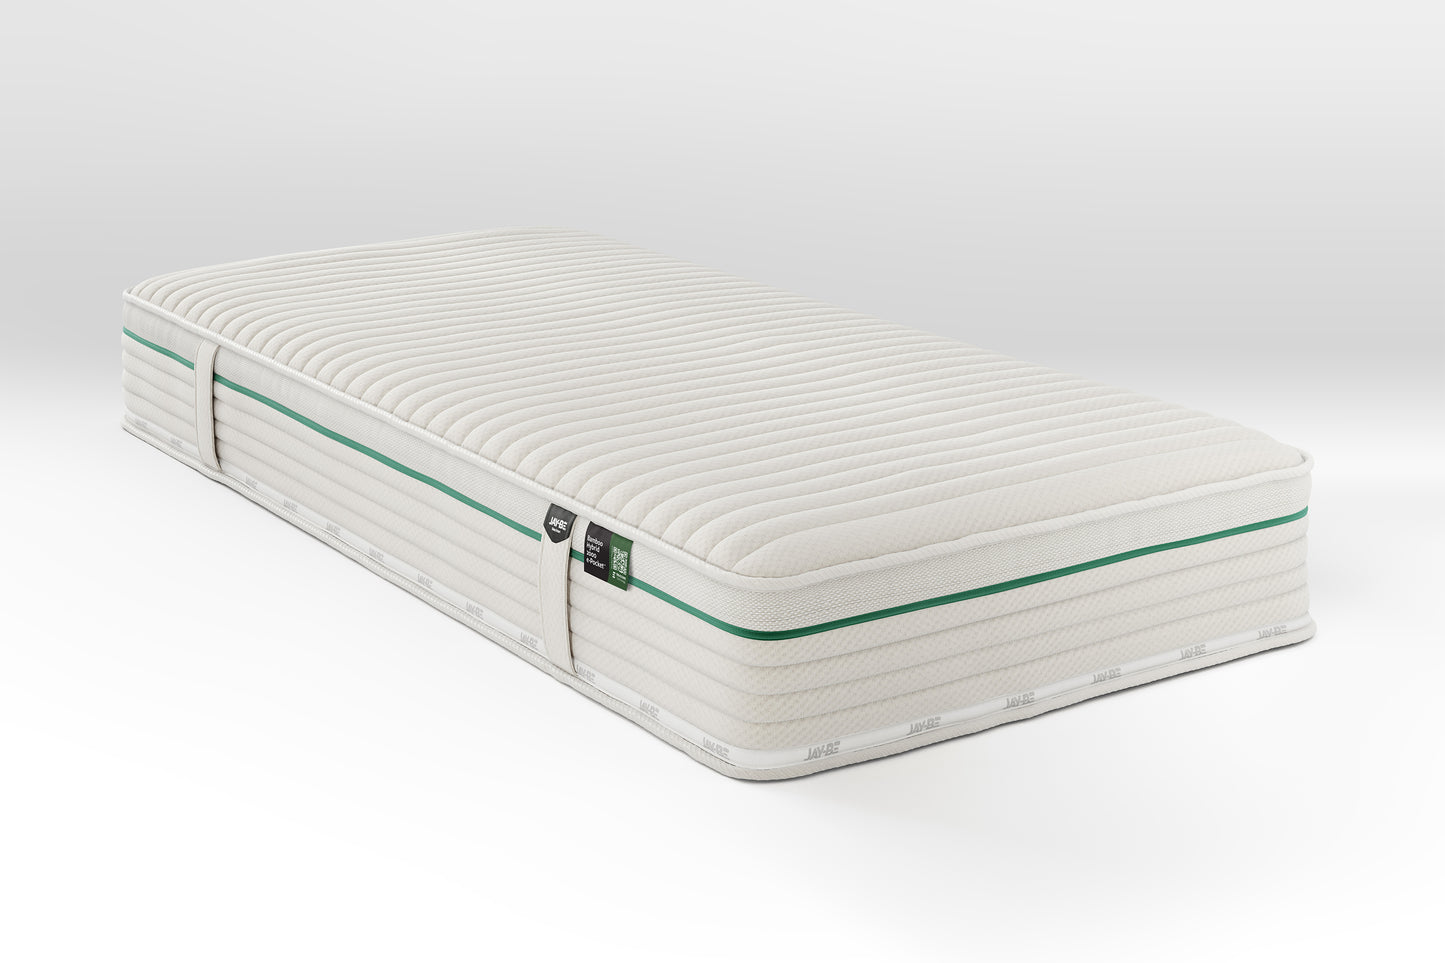 Jay-Be® Natural Fresh Bamboo Hybrid 2000 e-PocketTM mattress